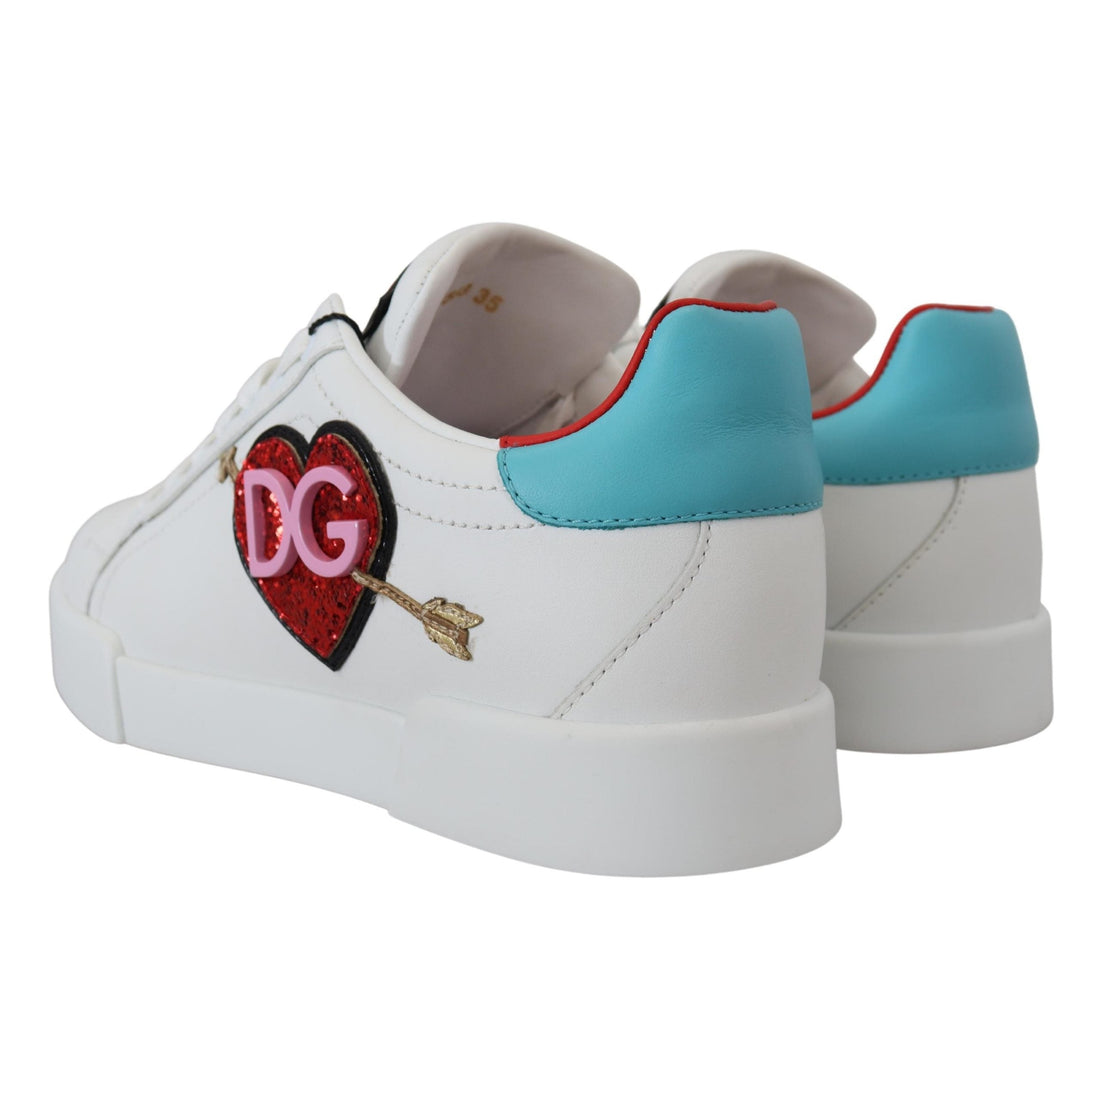 Dolce & Gabbana Elegant White Portofino Leather Sneakers